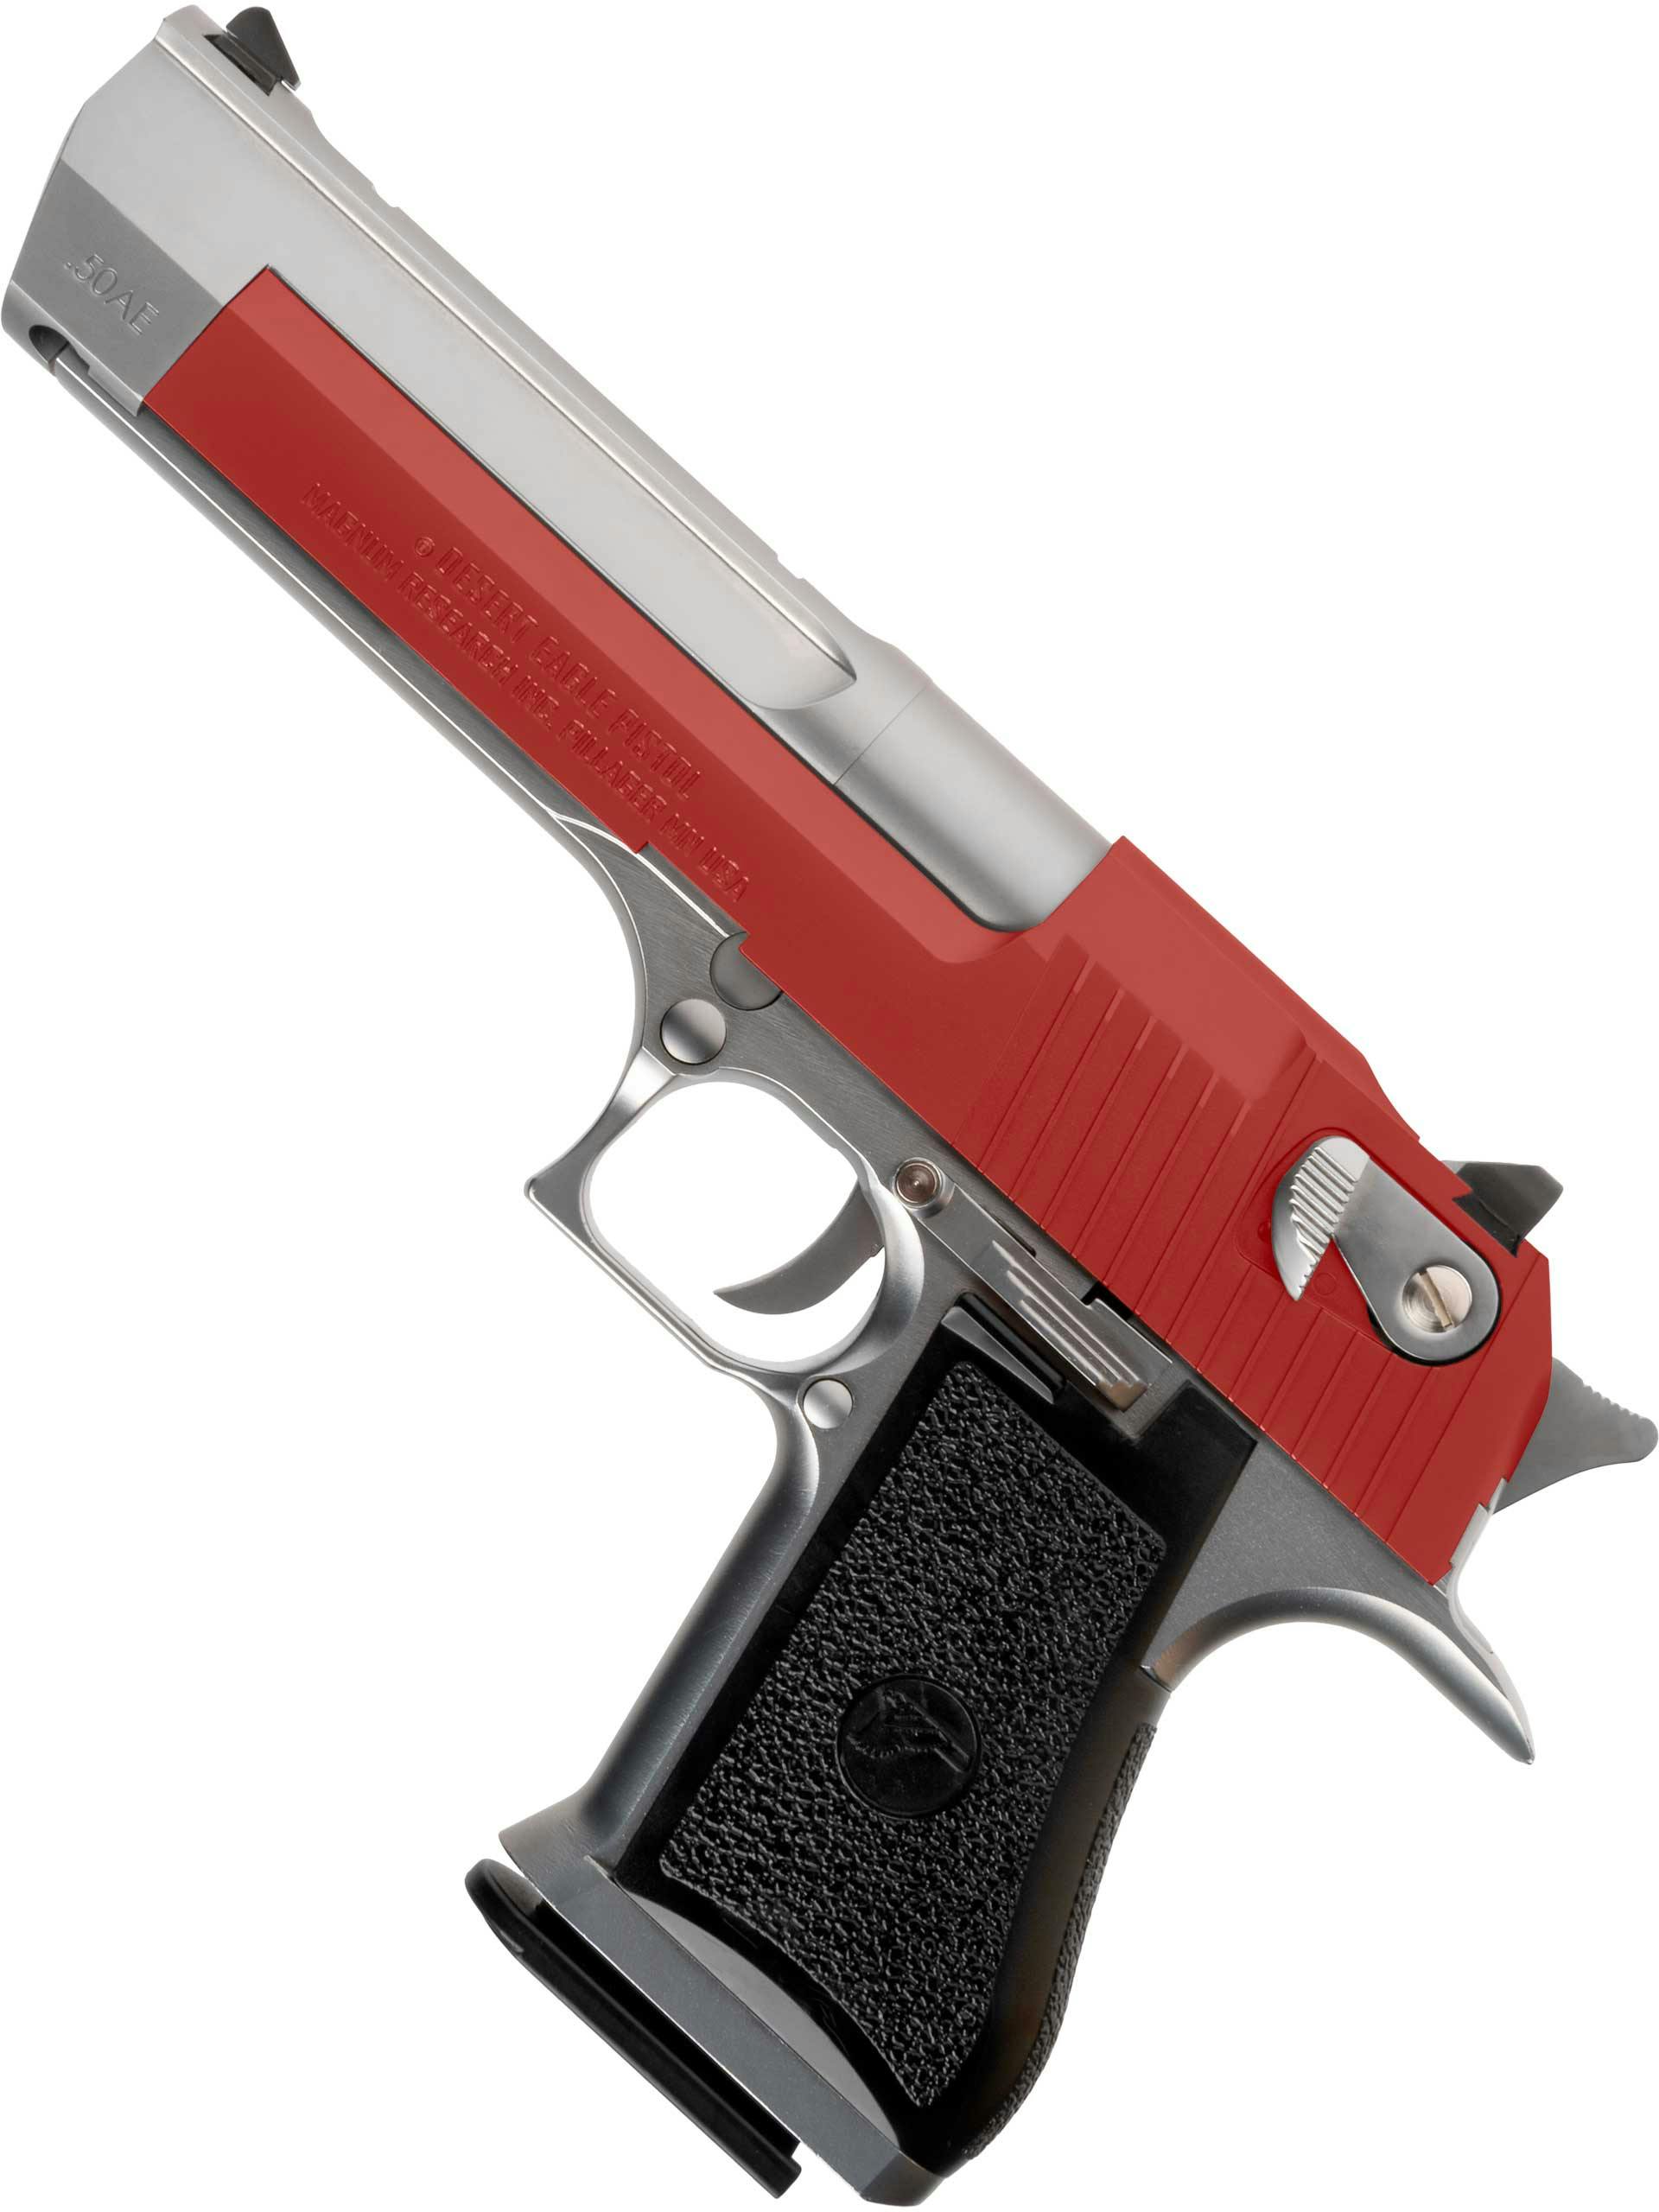 CYBERGUN Licensed .50 AE Magnum Desert Eagle Spring Power Airsoft Pistol by  KWC